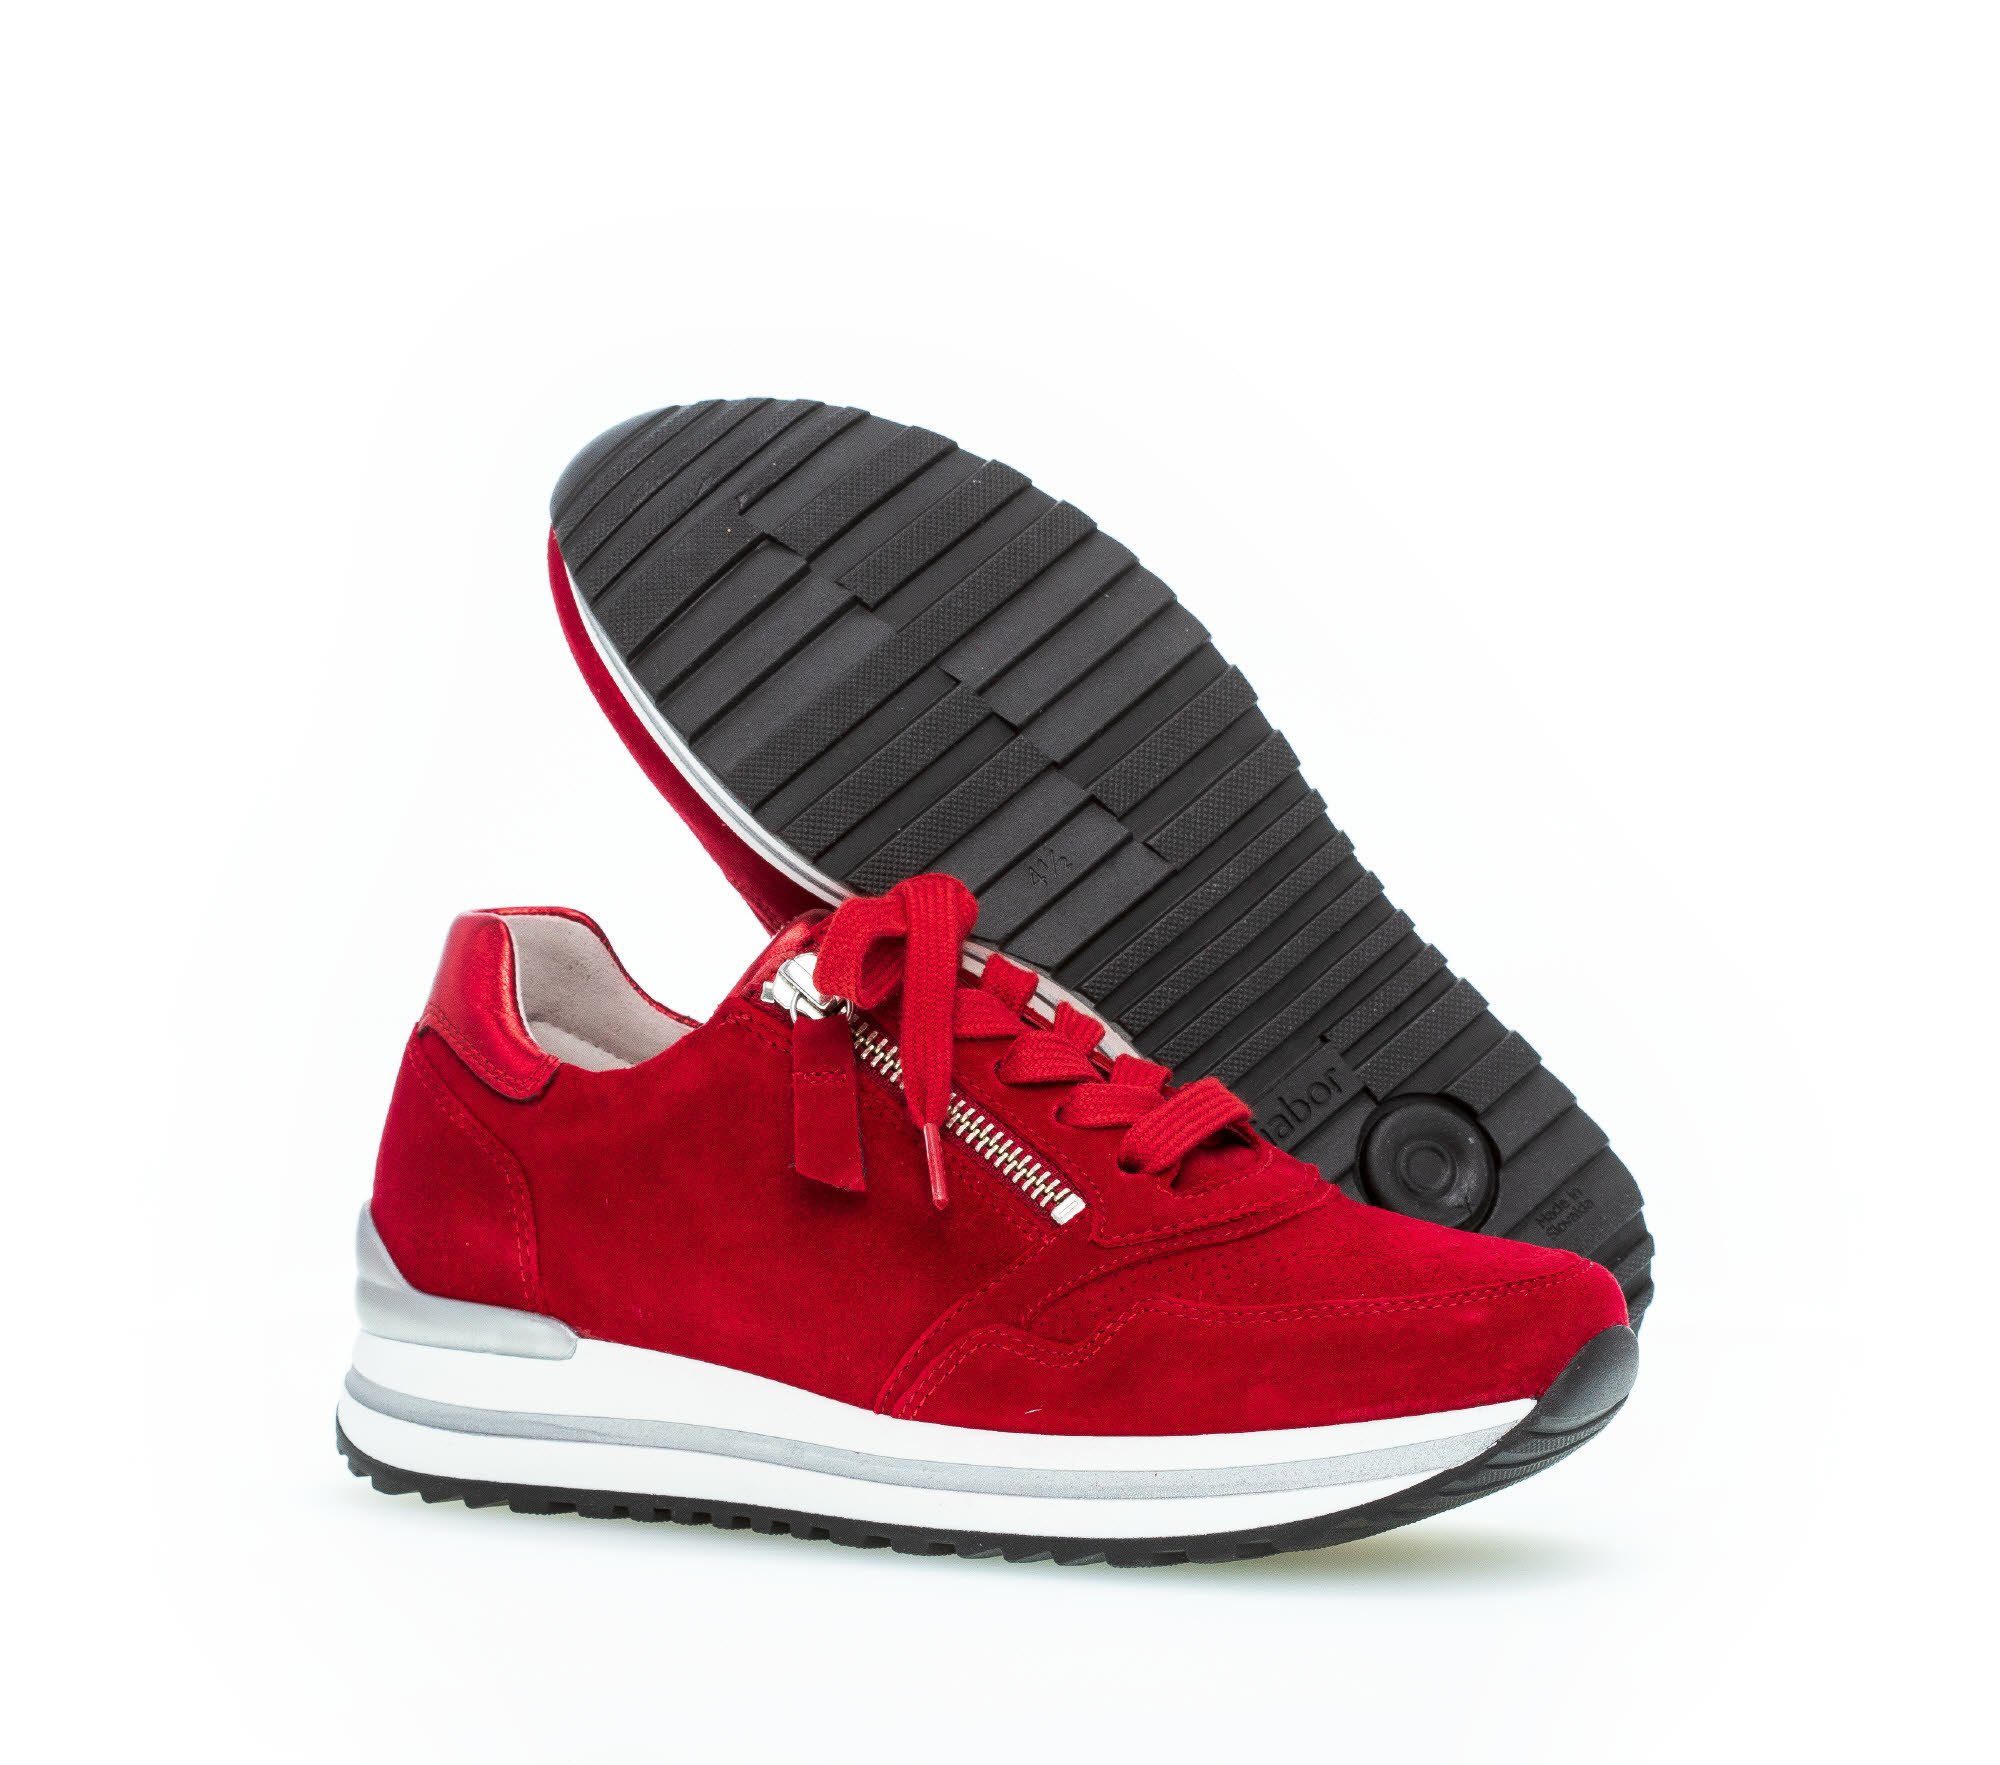 (rubin.rosso) Sneaker Rot Gabor 86.528.68